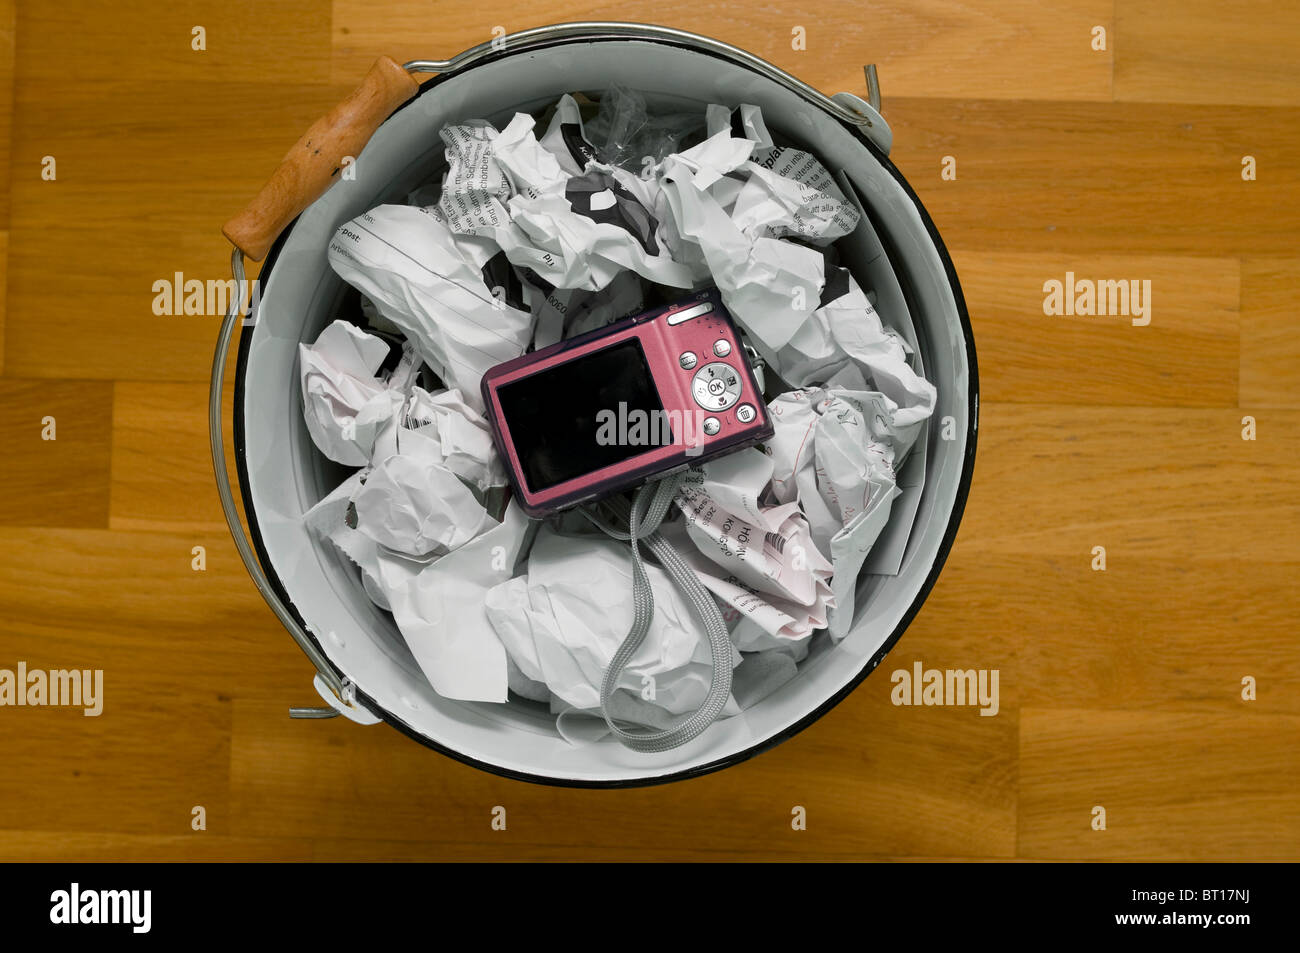 Digital camera thrown in waste paper basket bin Stock Photo